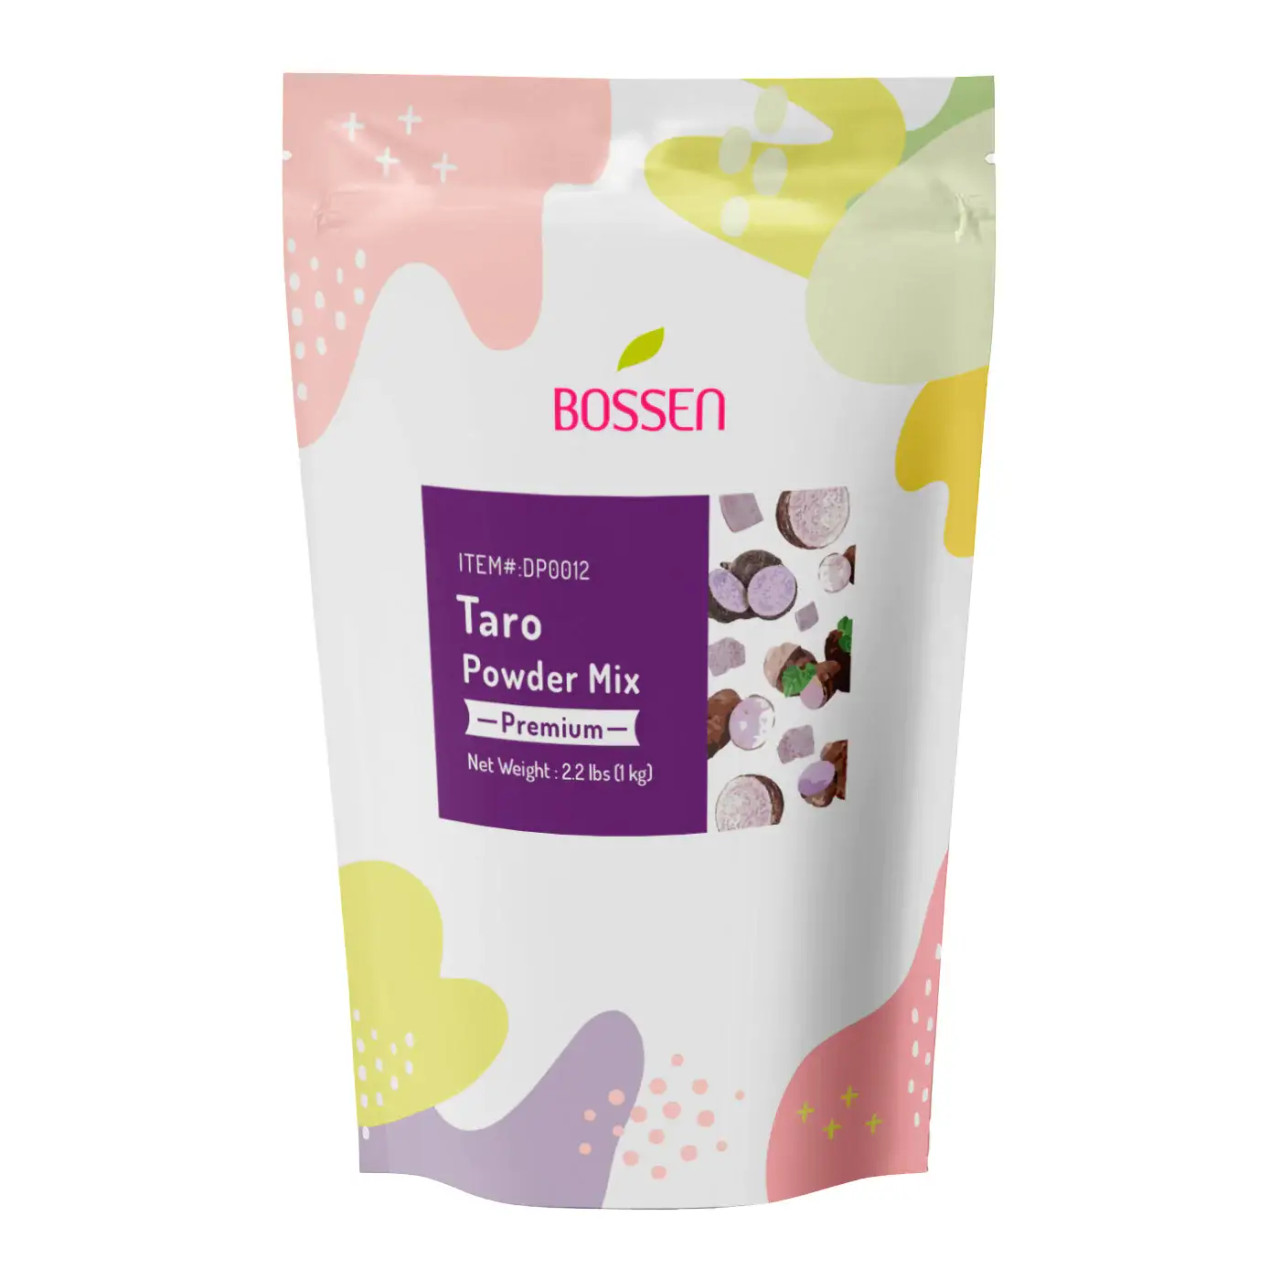 Bossen 1 kg (2.2 lb.) Premium Taro Powder Mix - Creamy Delight for Bubble Tea(10/Case)-Chicken Pieces